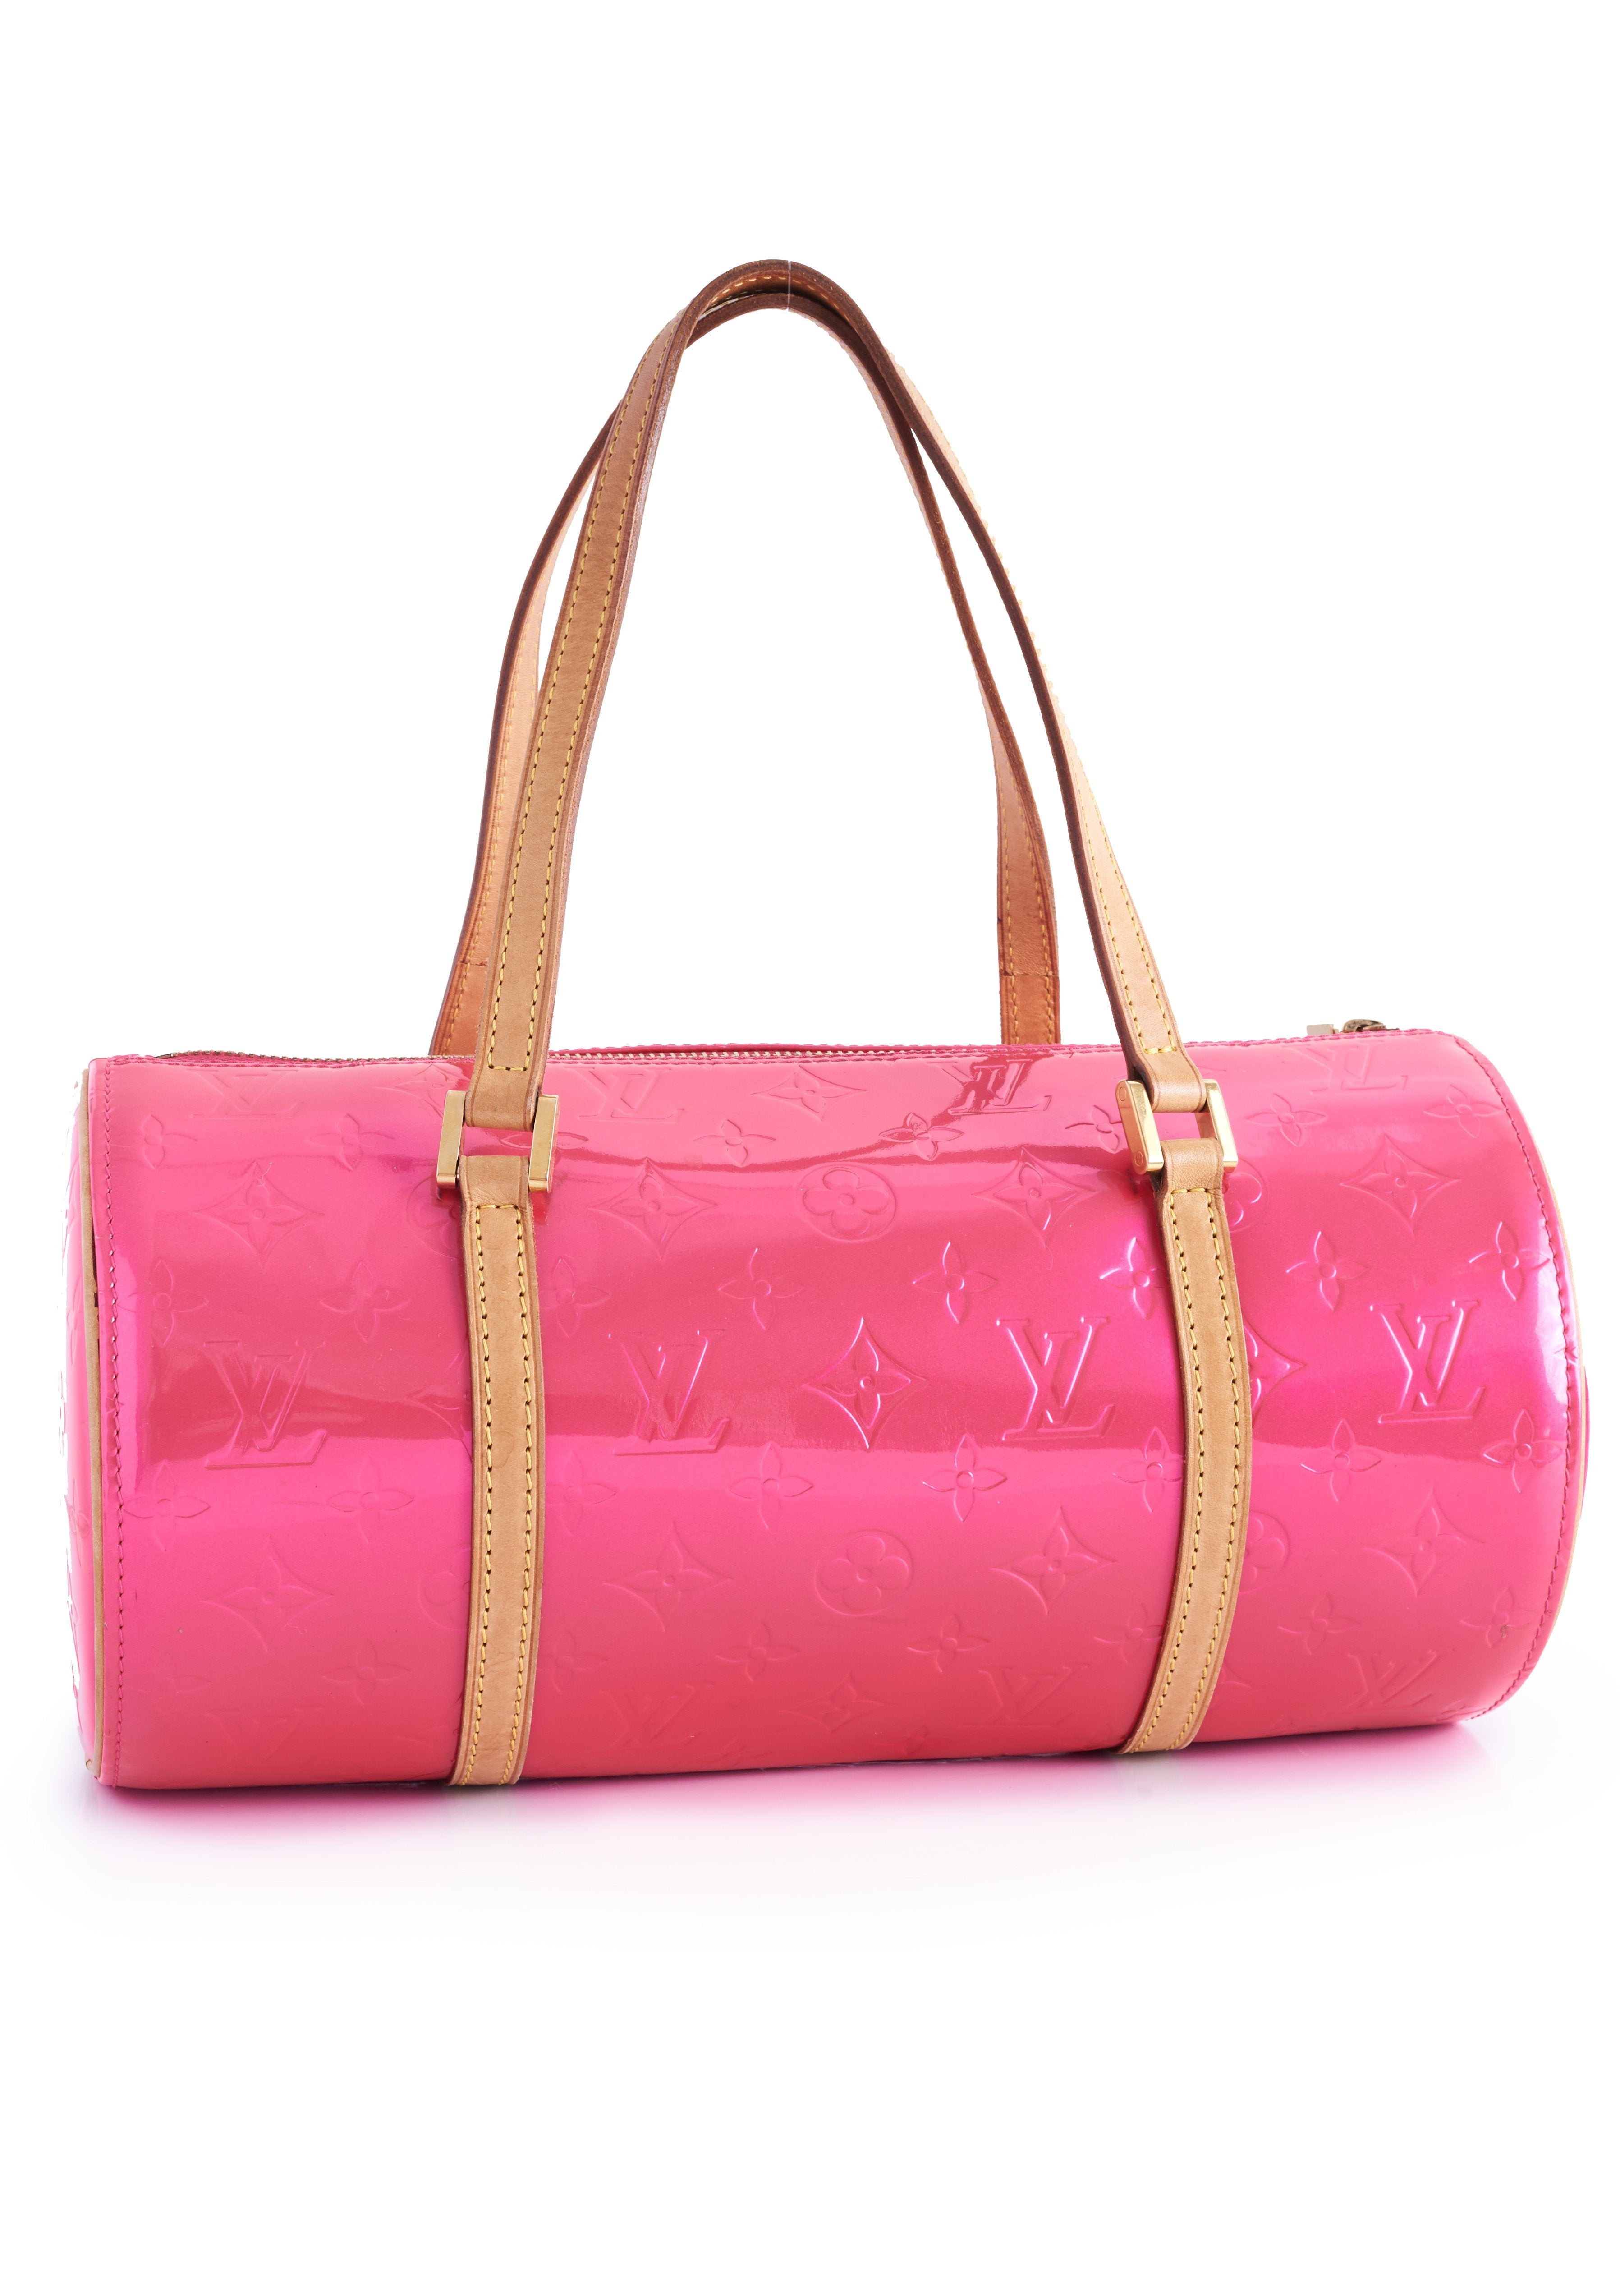 Lot - Louis Vuitton Bedford handbag